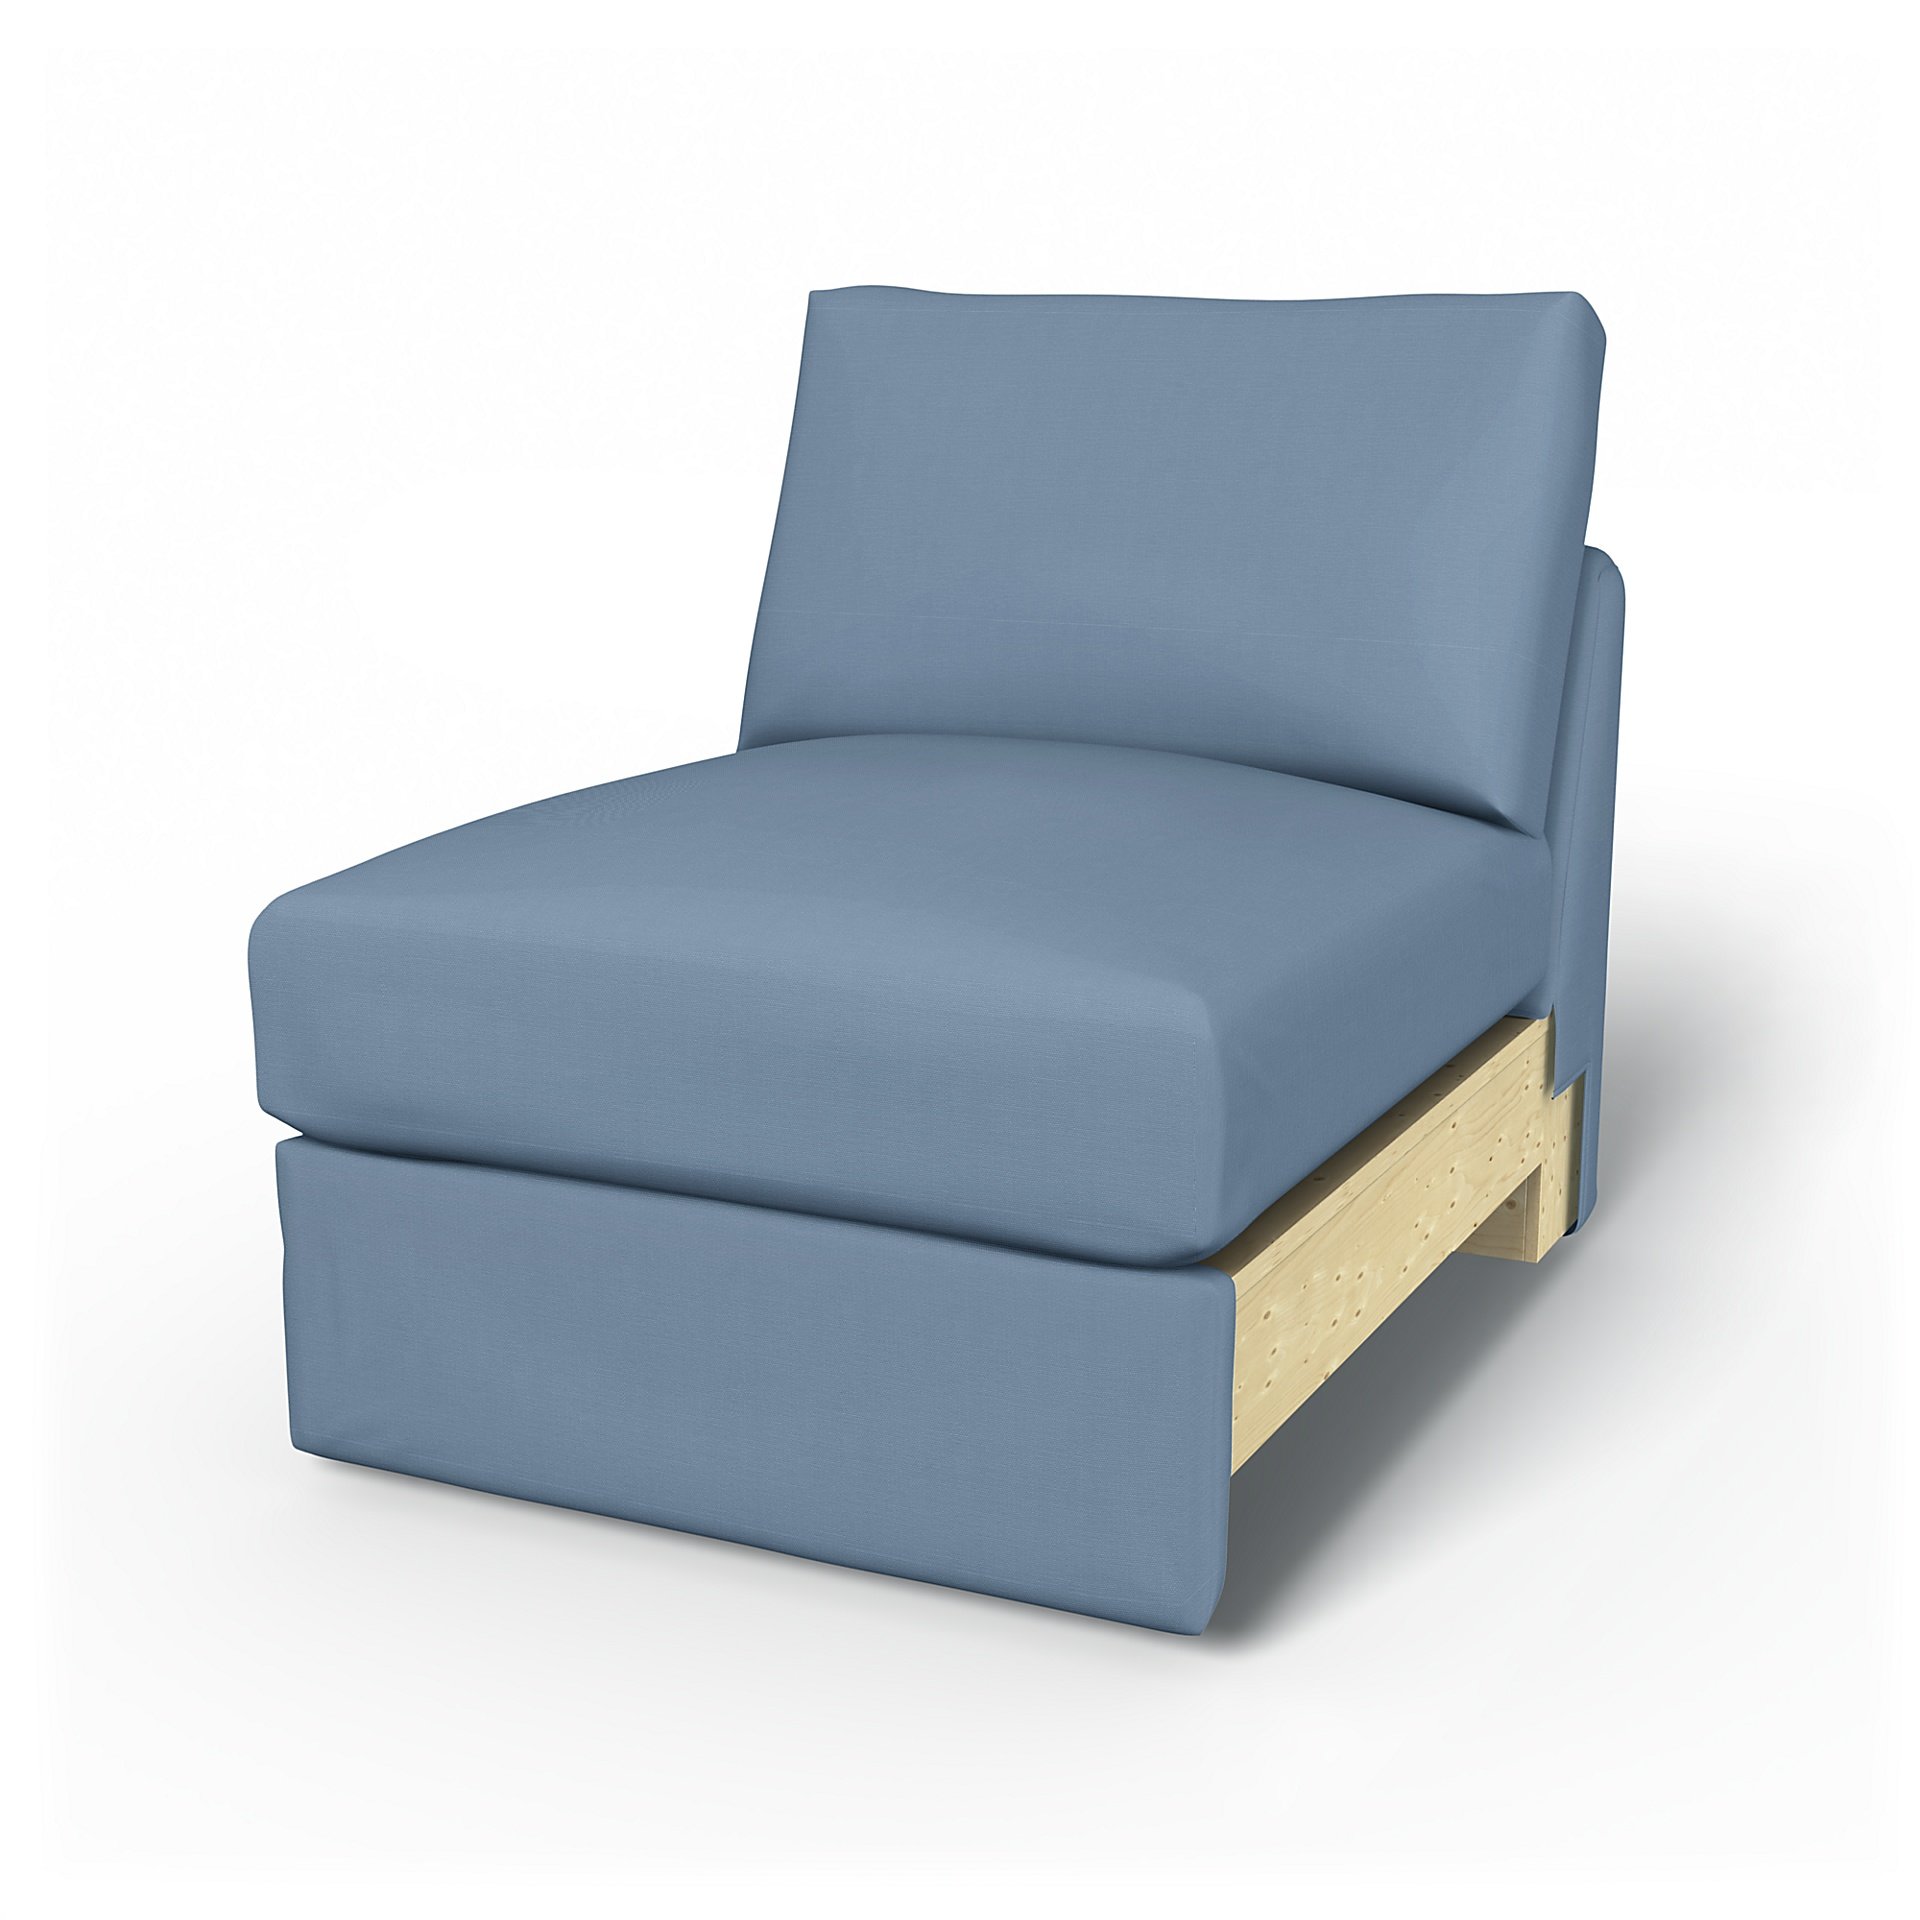 IKEA - Vimle 1 Seat Section Cover, Dusty Blue, Cotton - Bemz